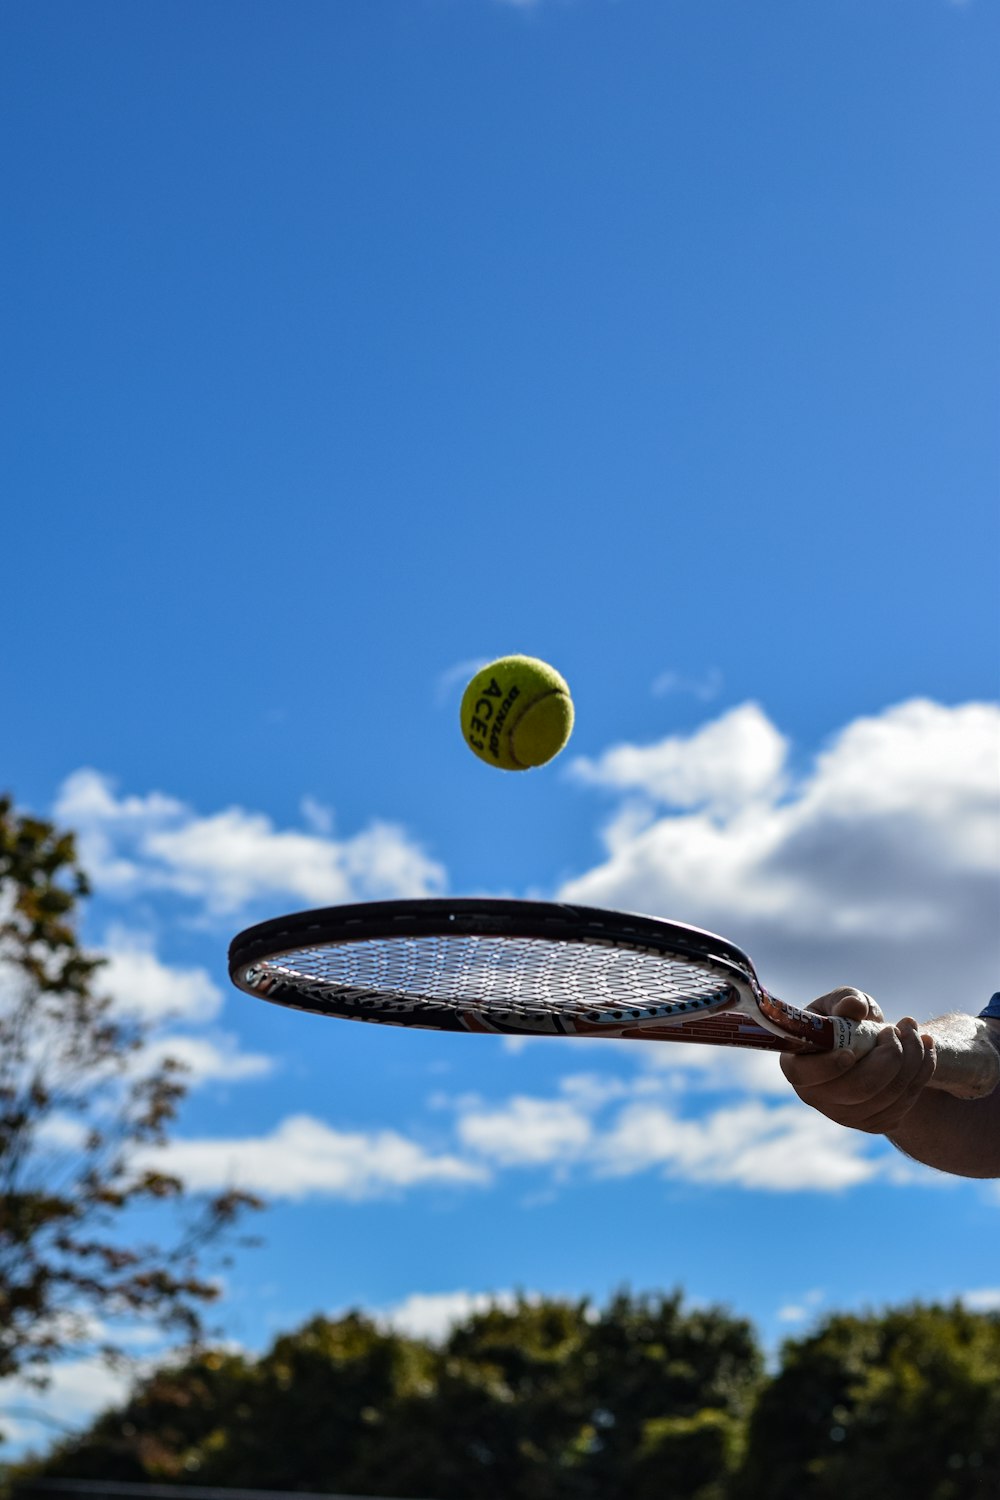 a person holding a tennis racket hitting a tennis ball